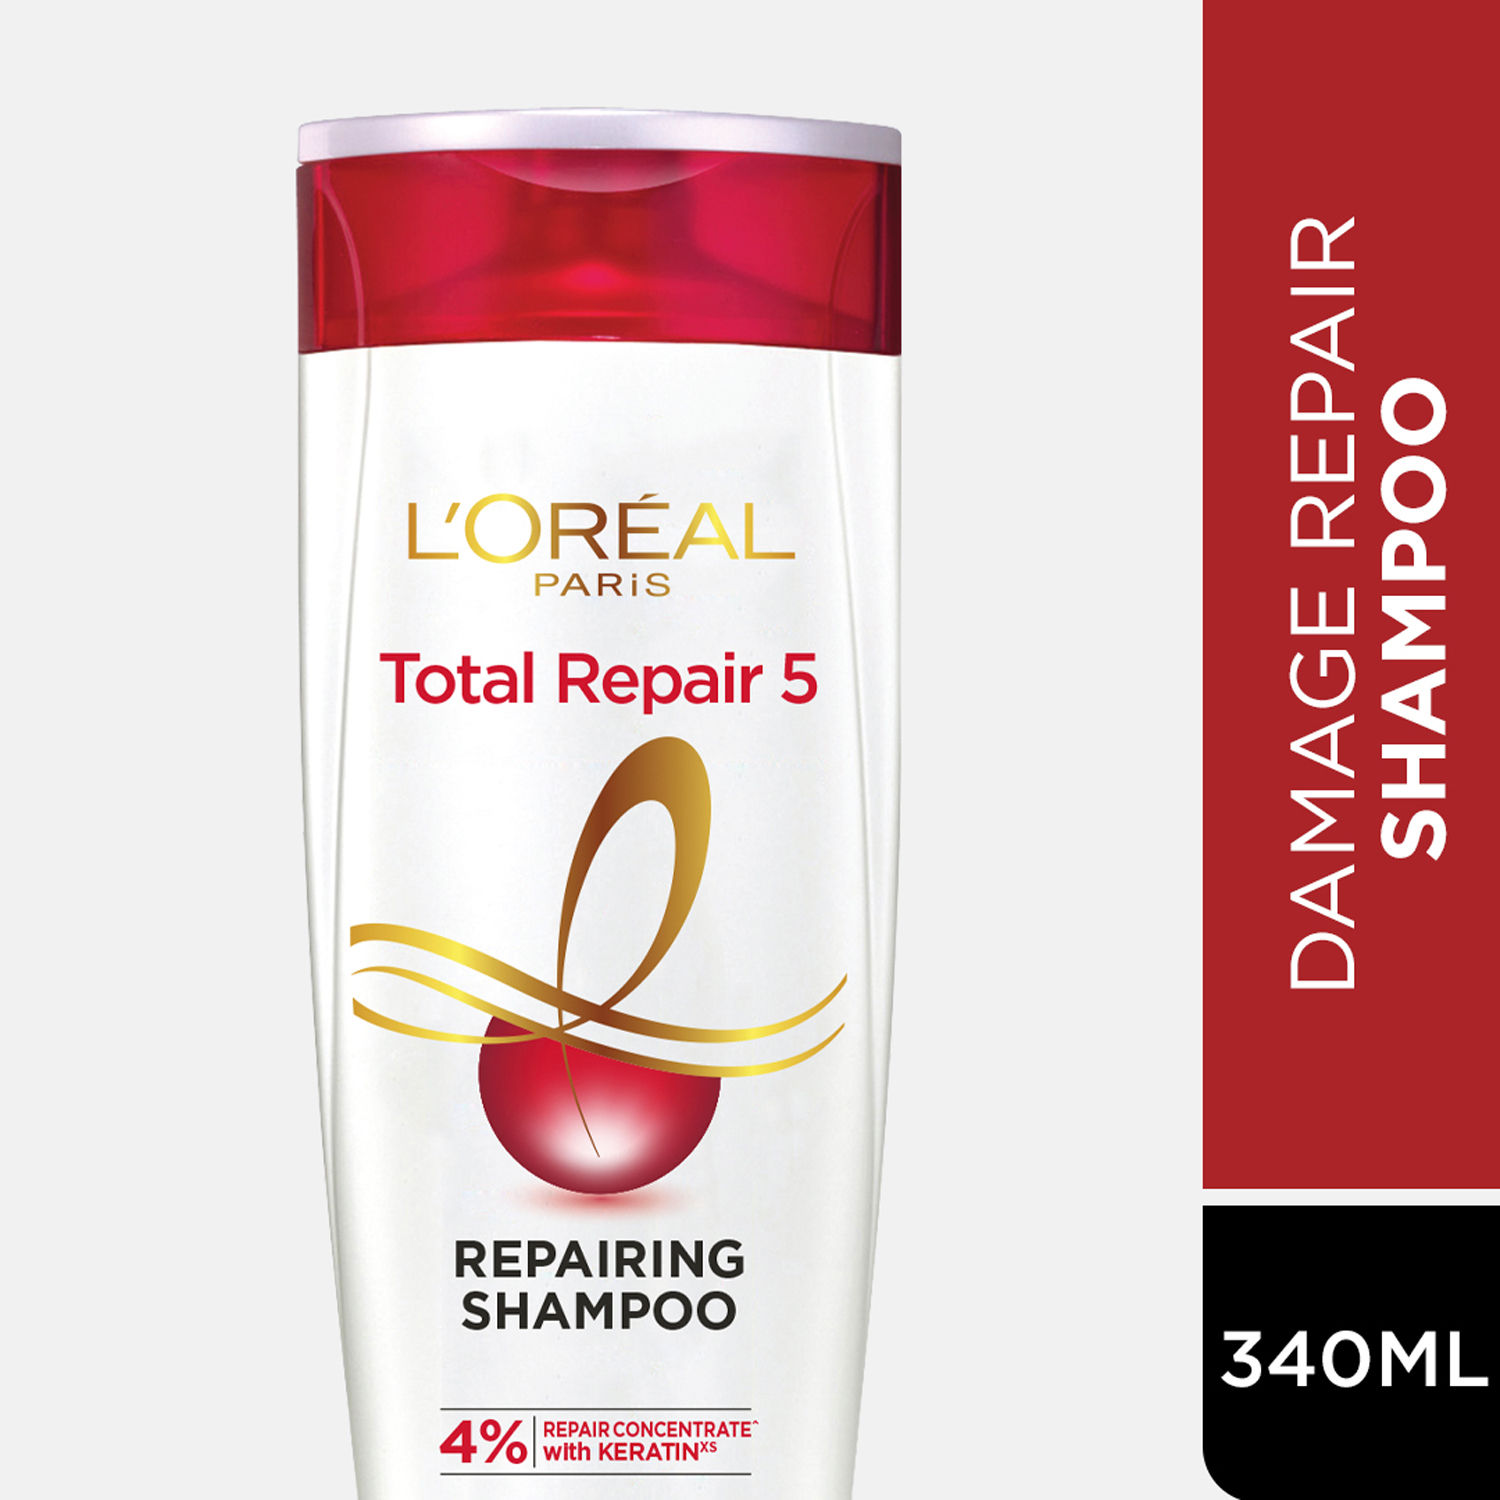 Buy L'Oreal Paris Shampoo, For Damaged and Weak Hair, With Pro-Keratin + Ceramide, Total Repair 5, 340 ml - Purplle